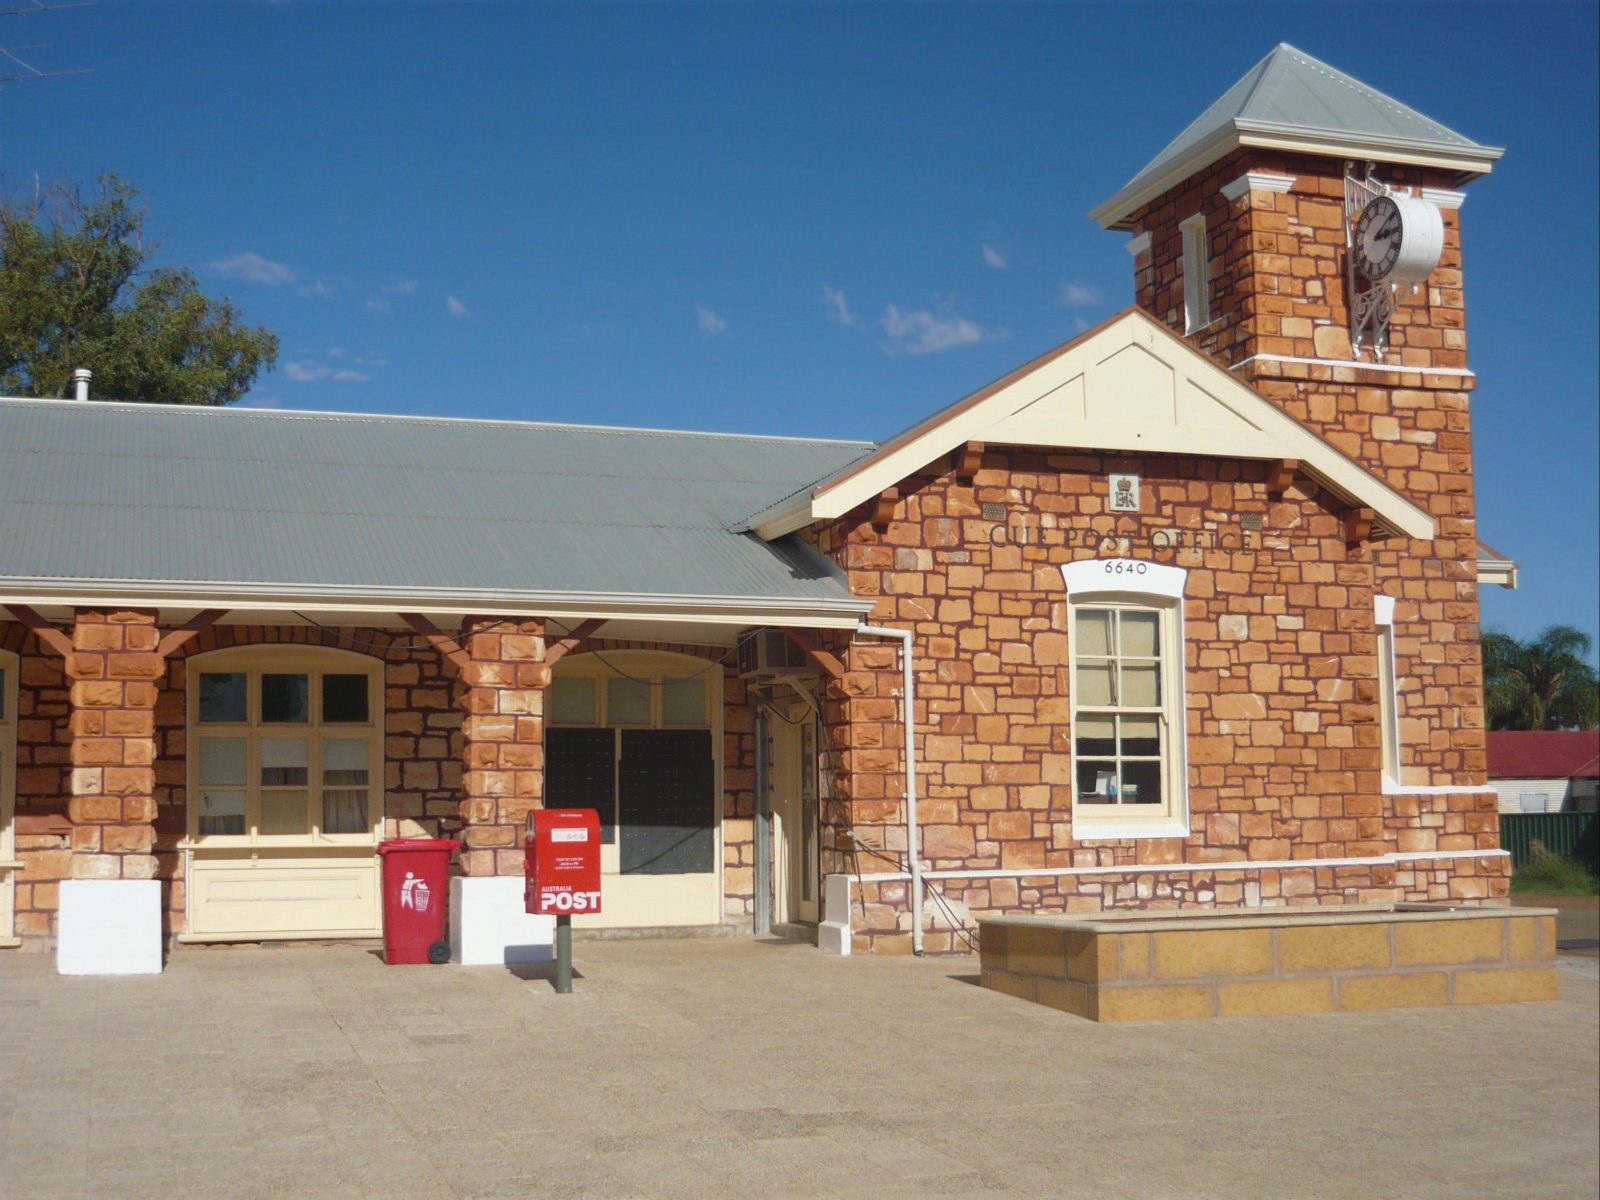 Cue District Visitor Centre, Cue, Western Australia